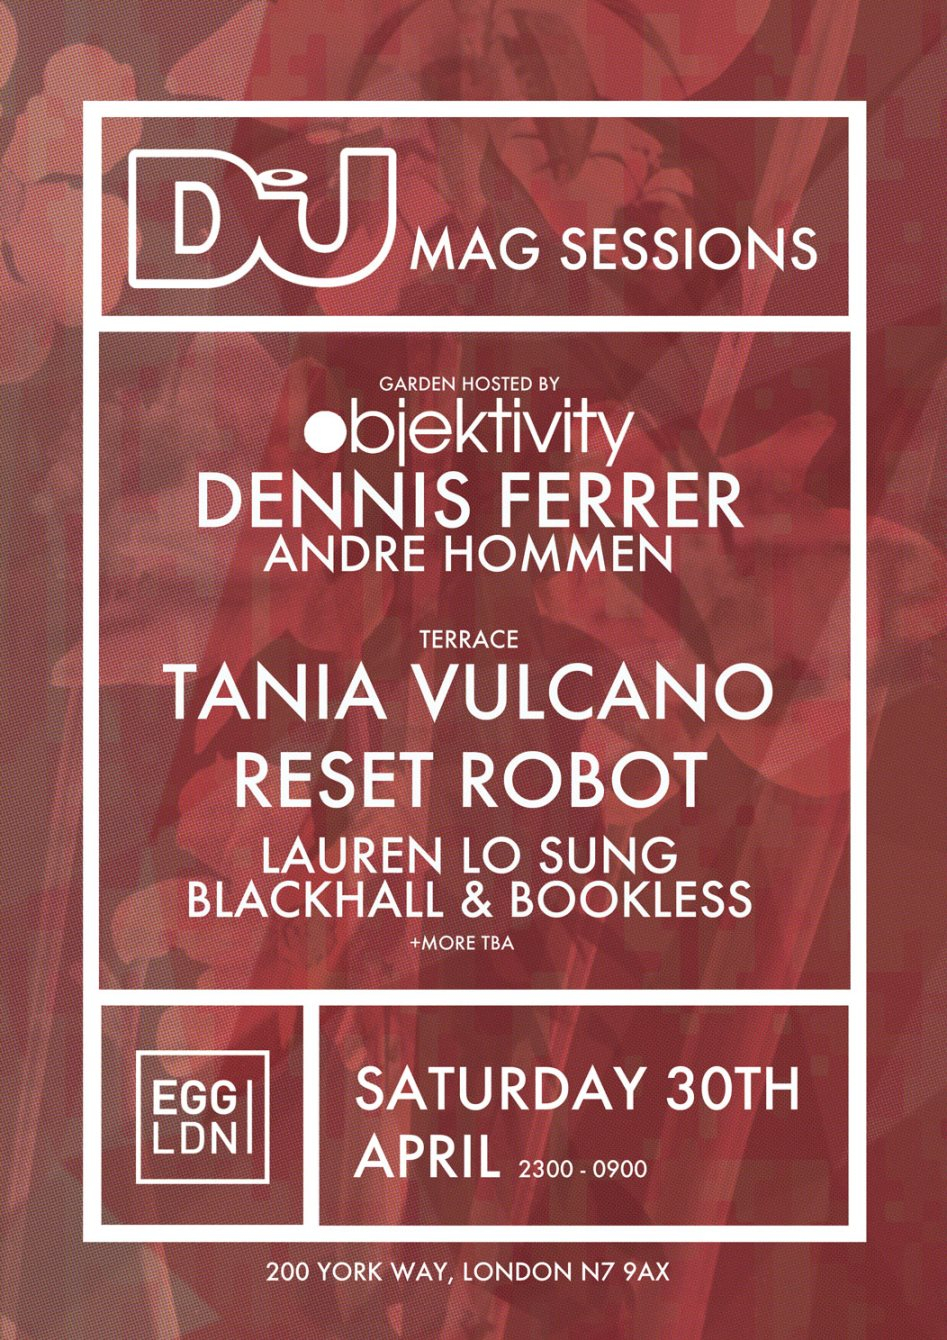 DJ MAG Sessions: Objektivity with Dennis Ferrer, Tania Vulcano, Reset Robot, Andre Hommen - Flyer front